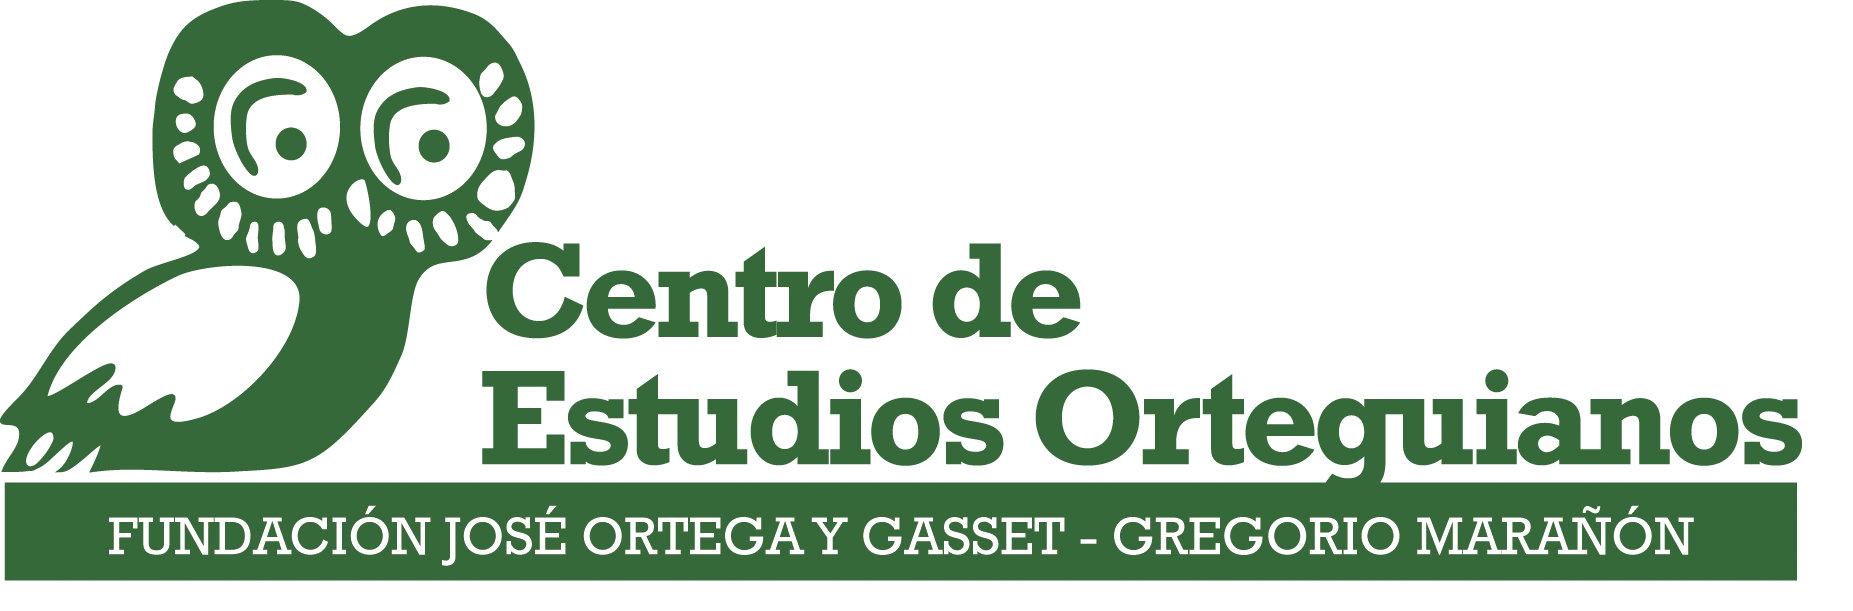 Centro de Estudios Orteguianos